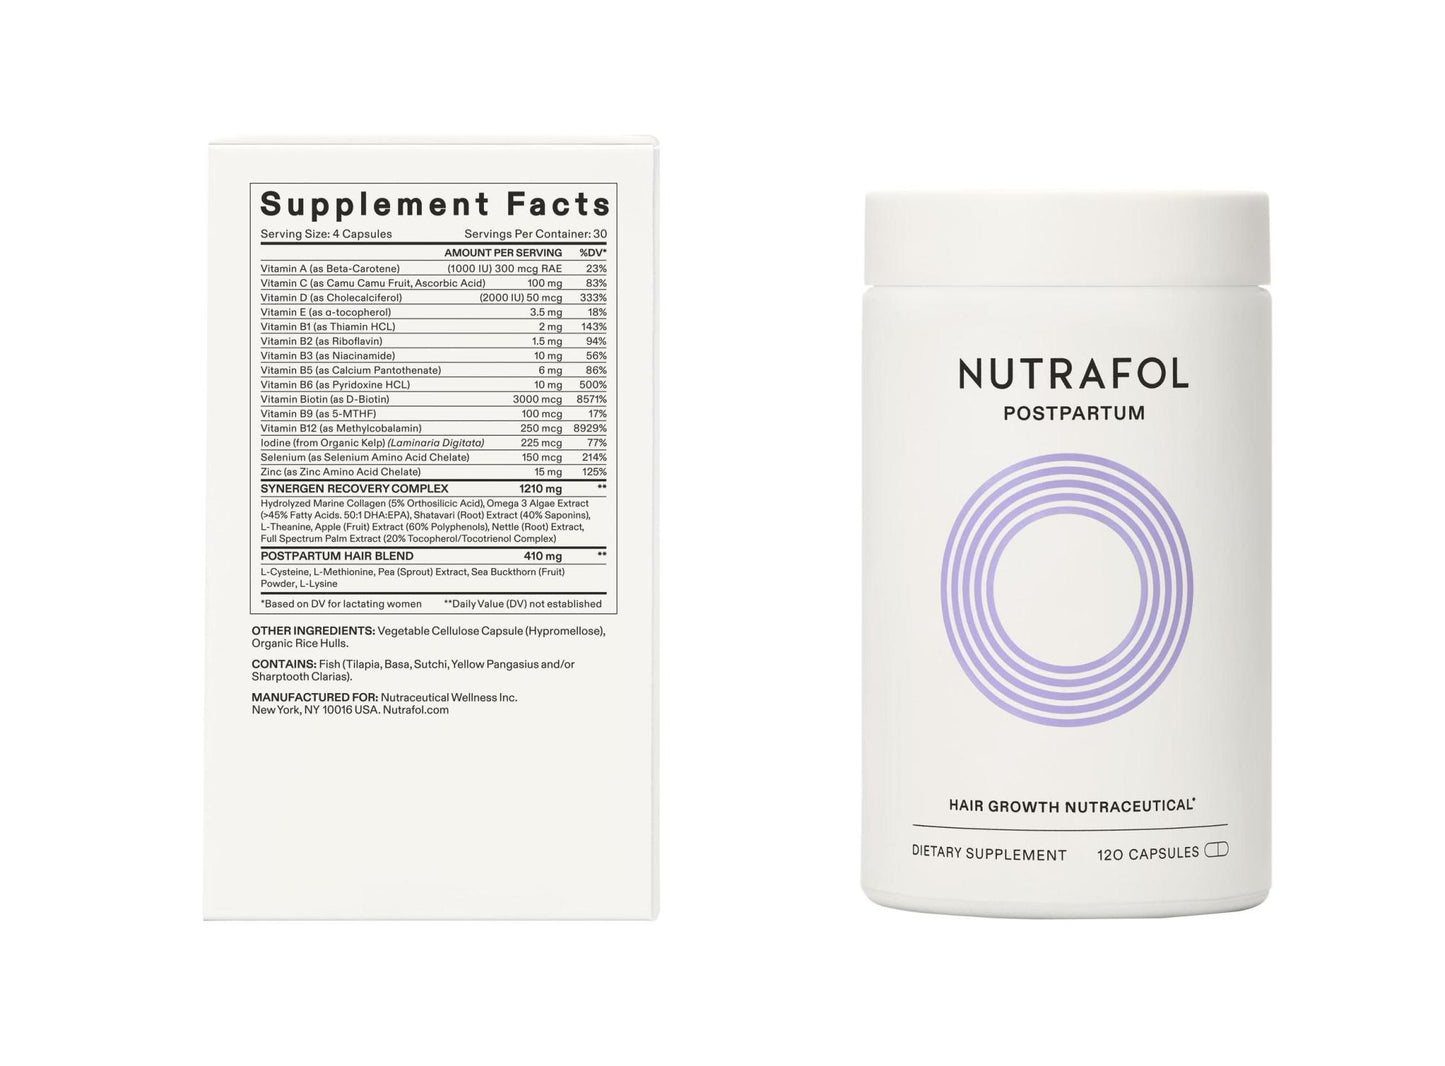 Nutrafol Postpartum (3-Month Pack)